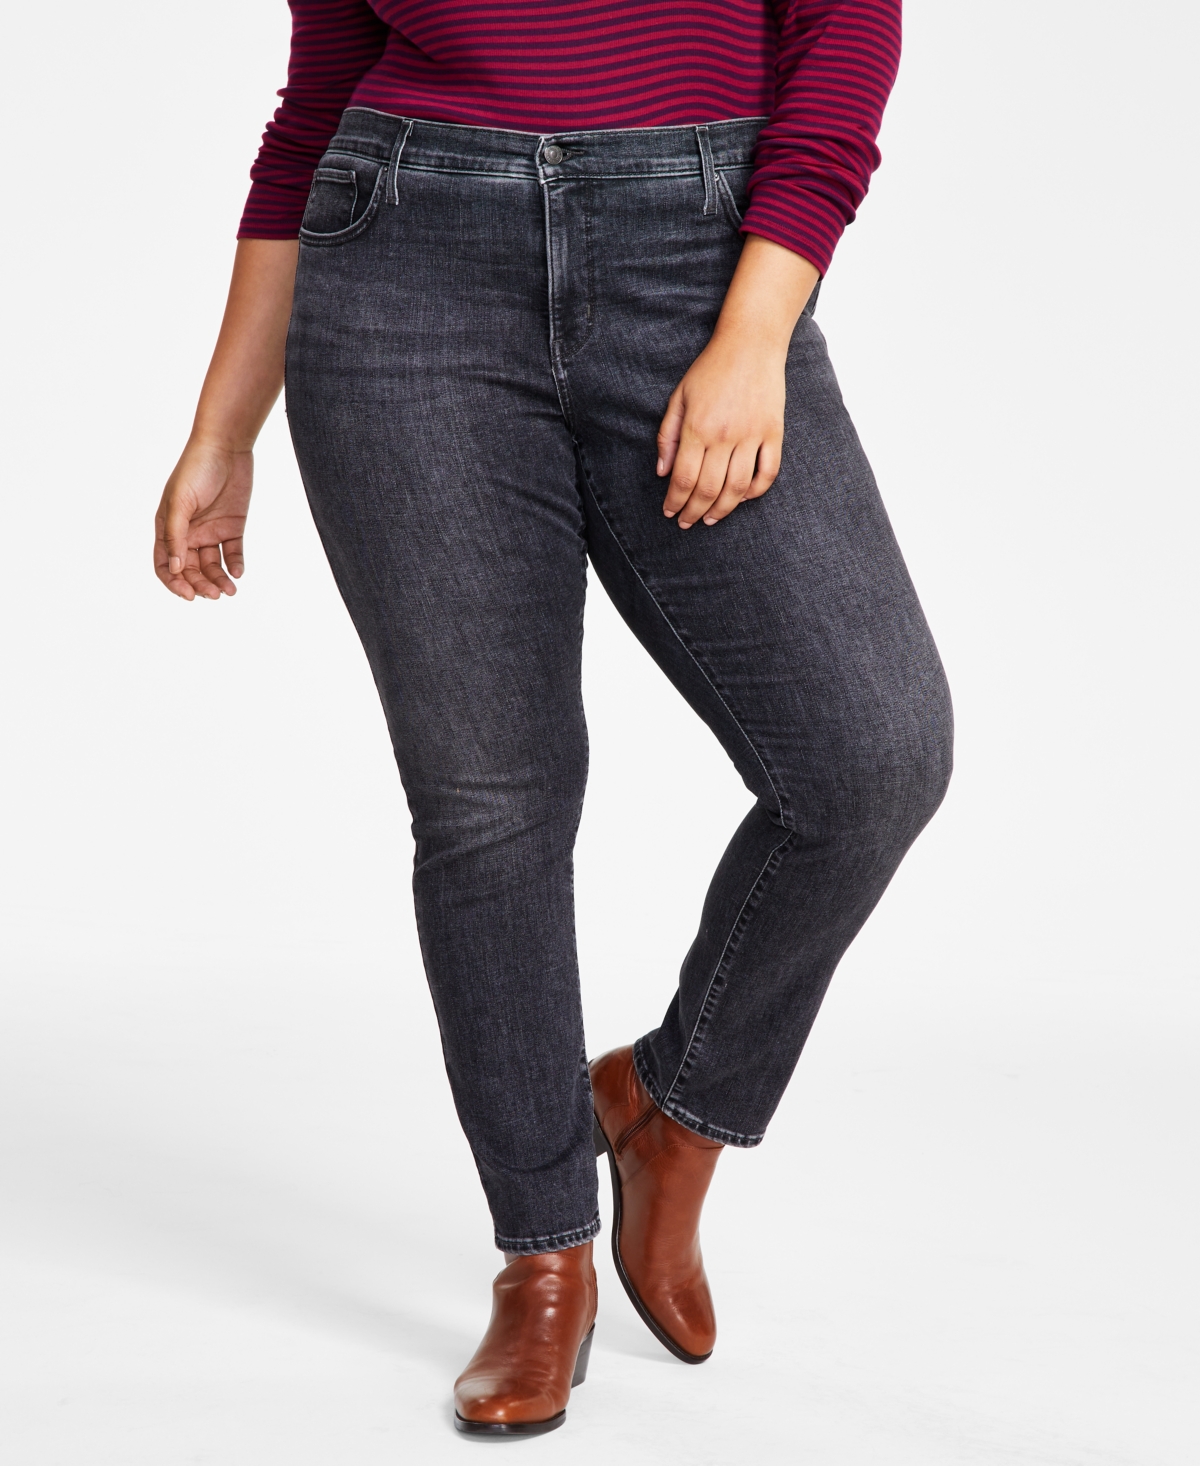 Levi's Trendy Plus Size 311 Shaping Skinny Jeans In Black Worn In